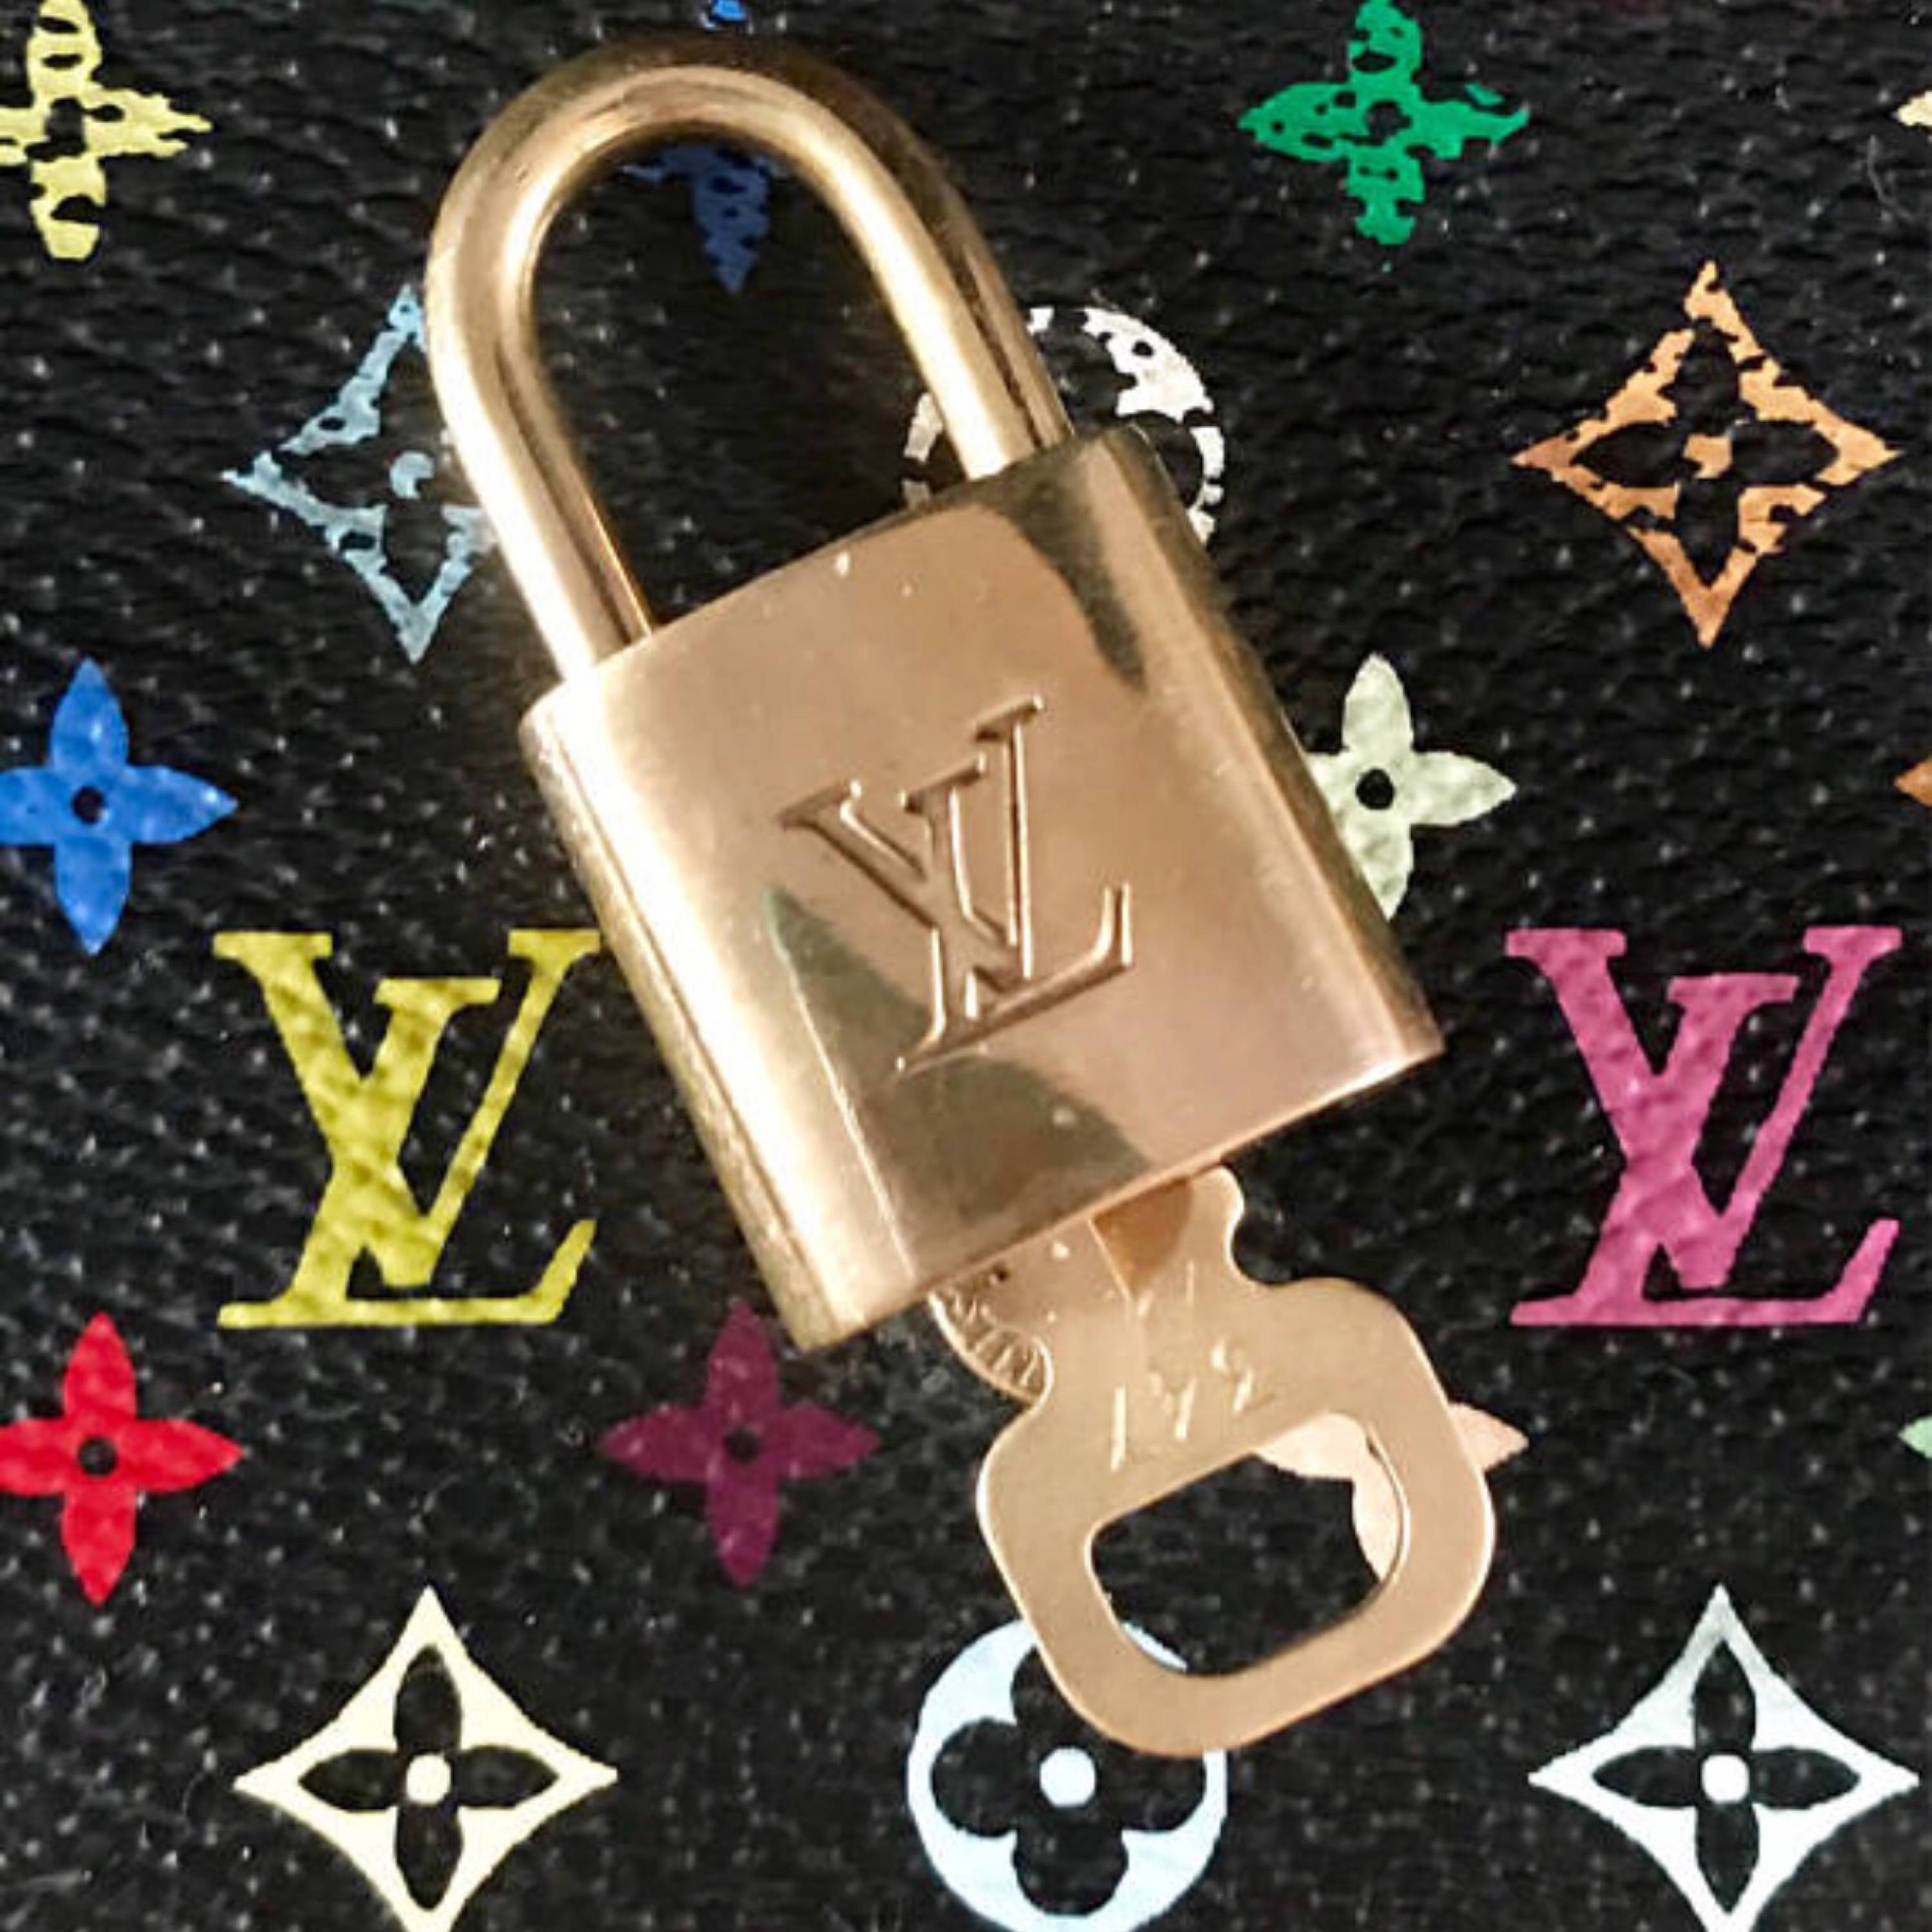 LOUIS VUITTON vintage leather/brass lock + key necklace